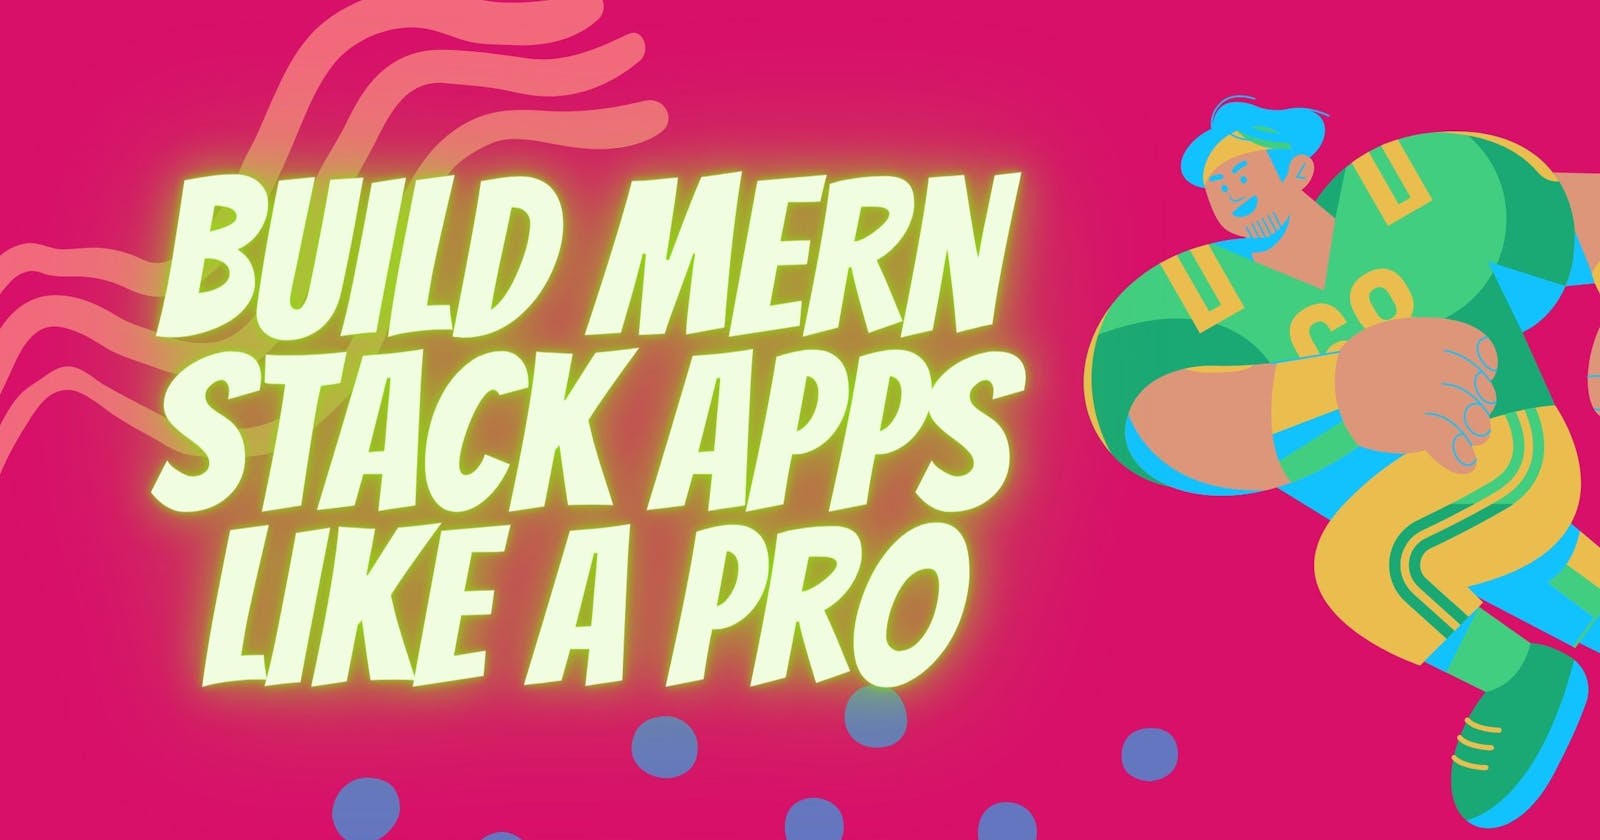 Build MERN applications like a pro